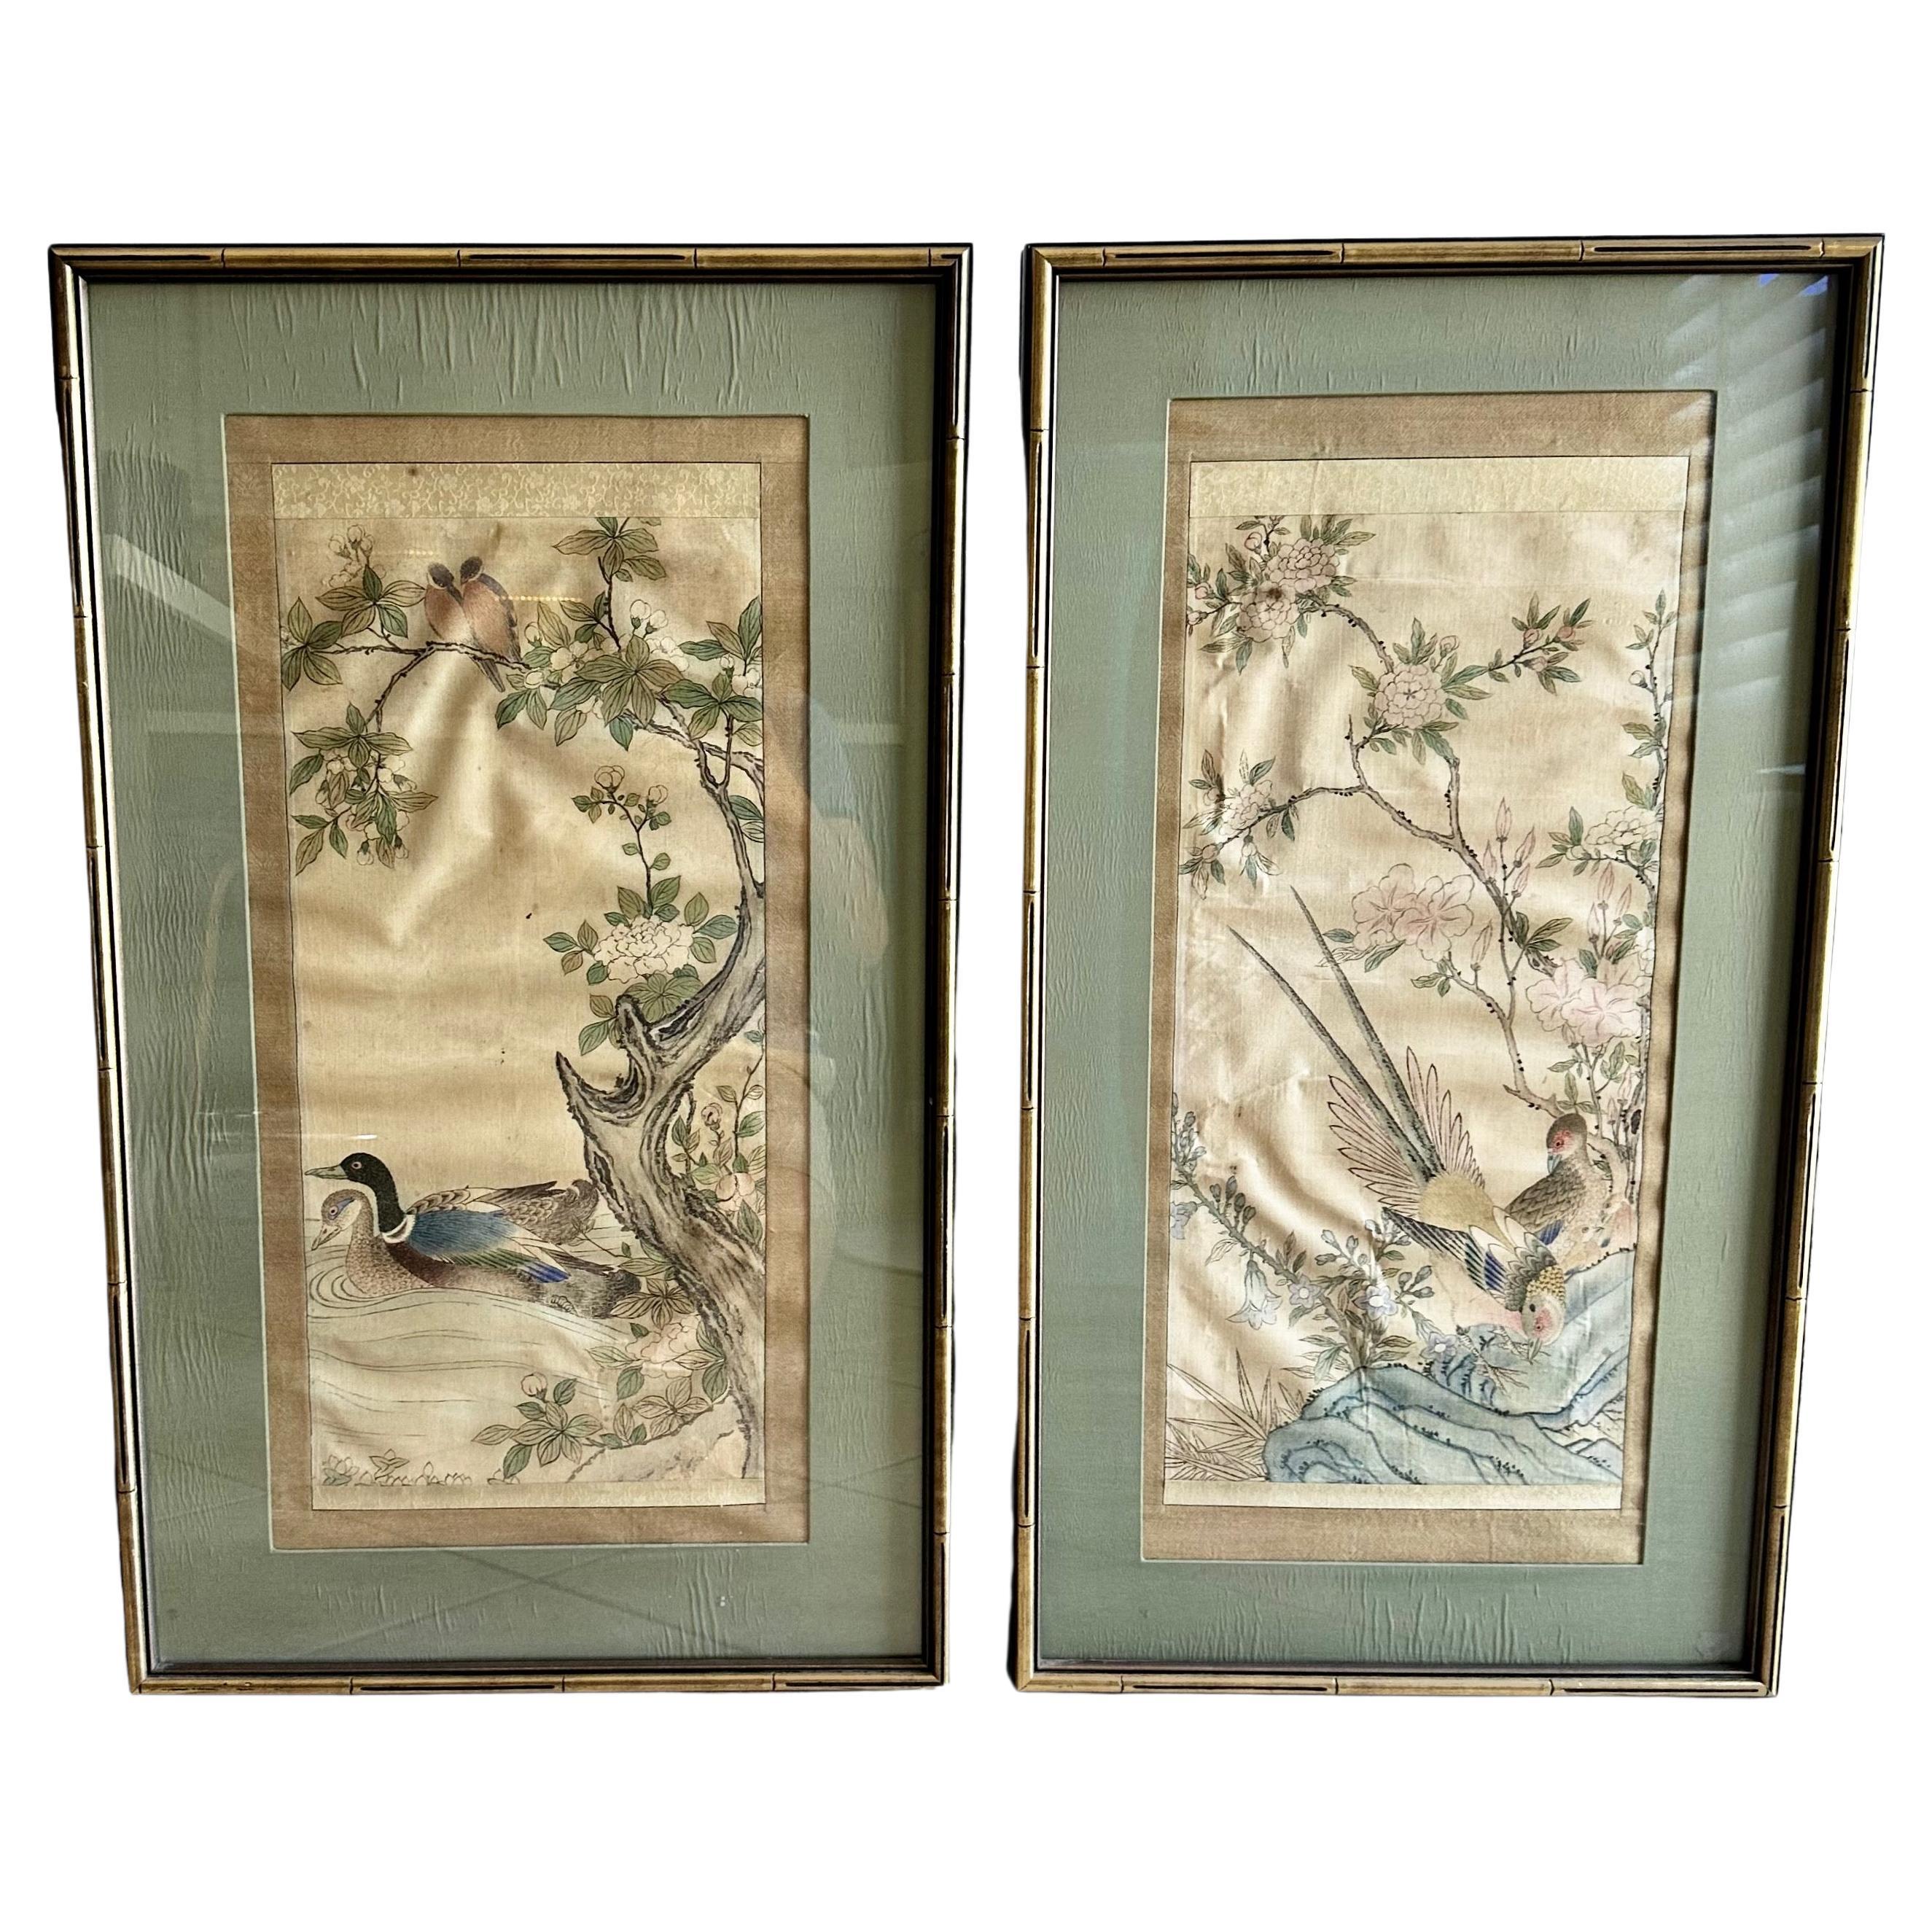 Pair Chinese Silk Scroll Framed Paintings